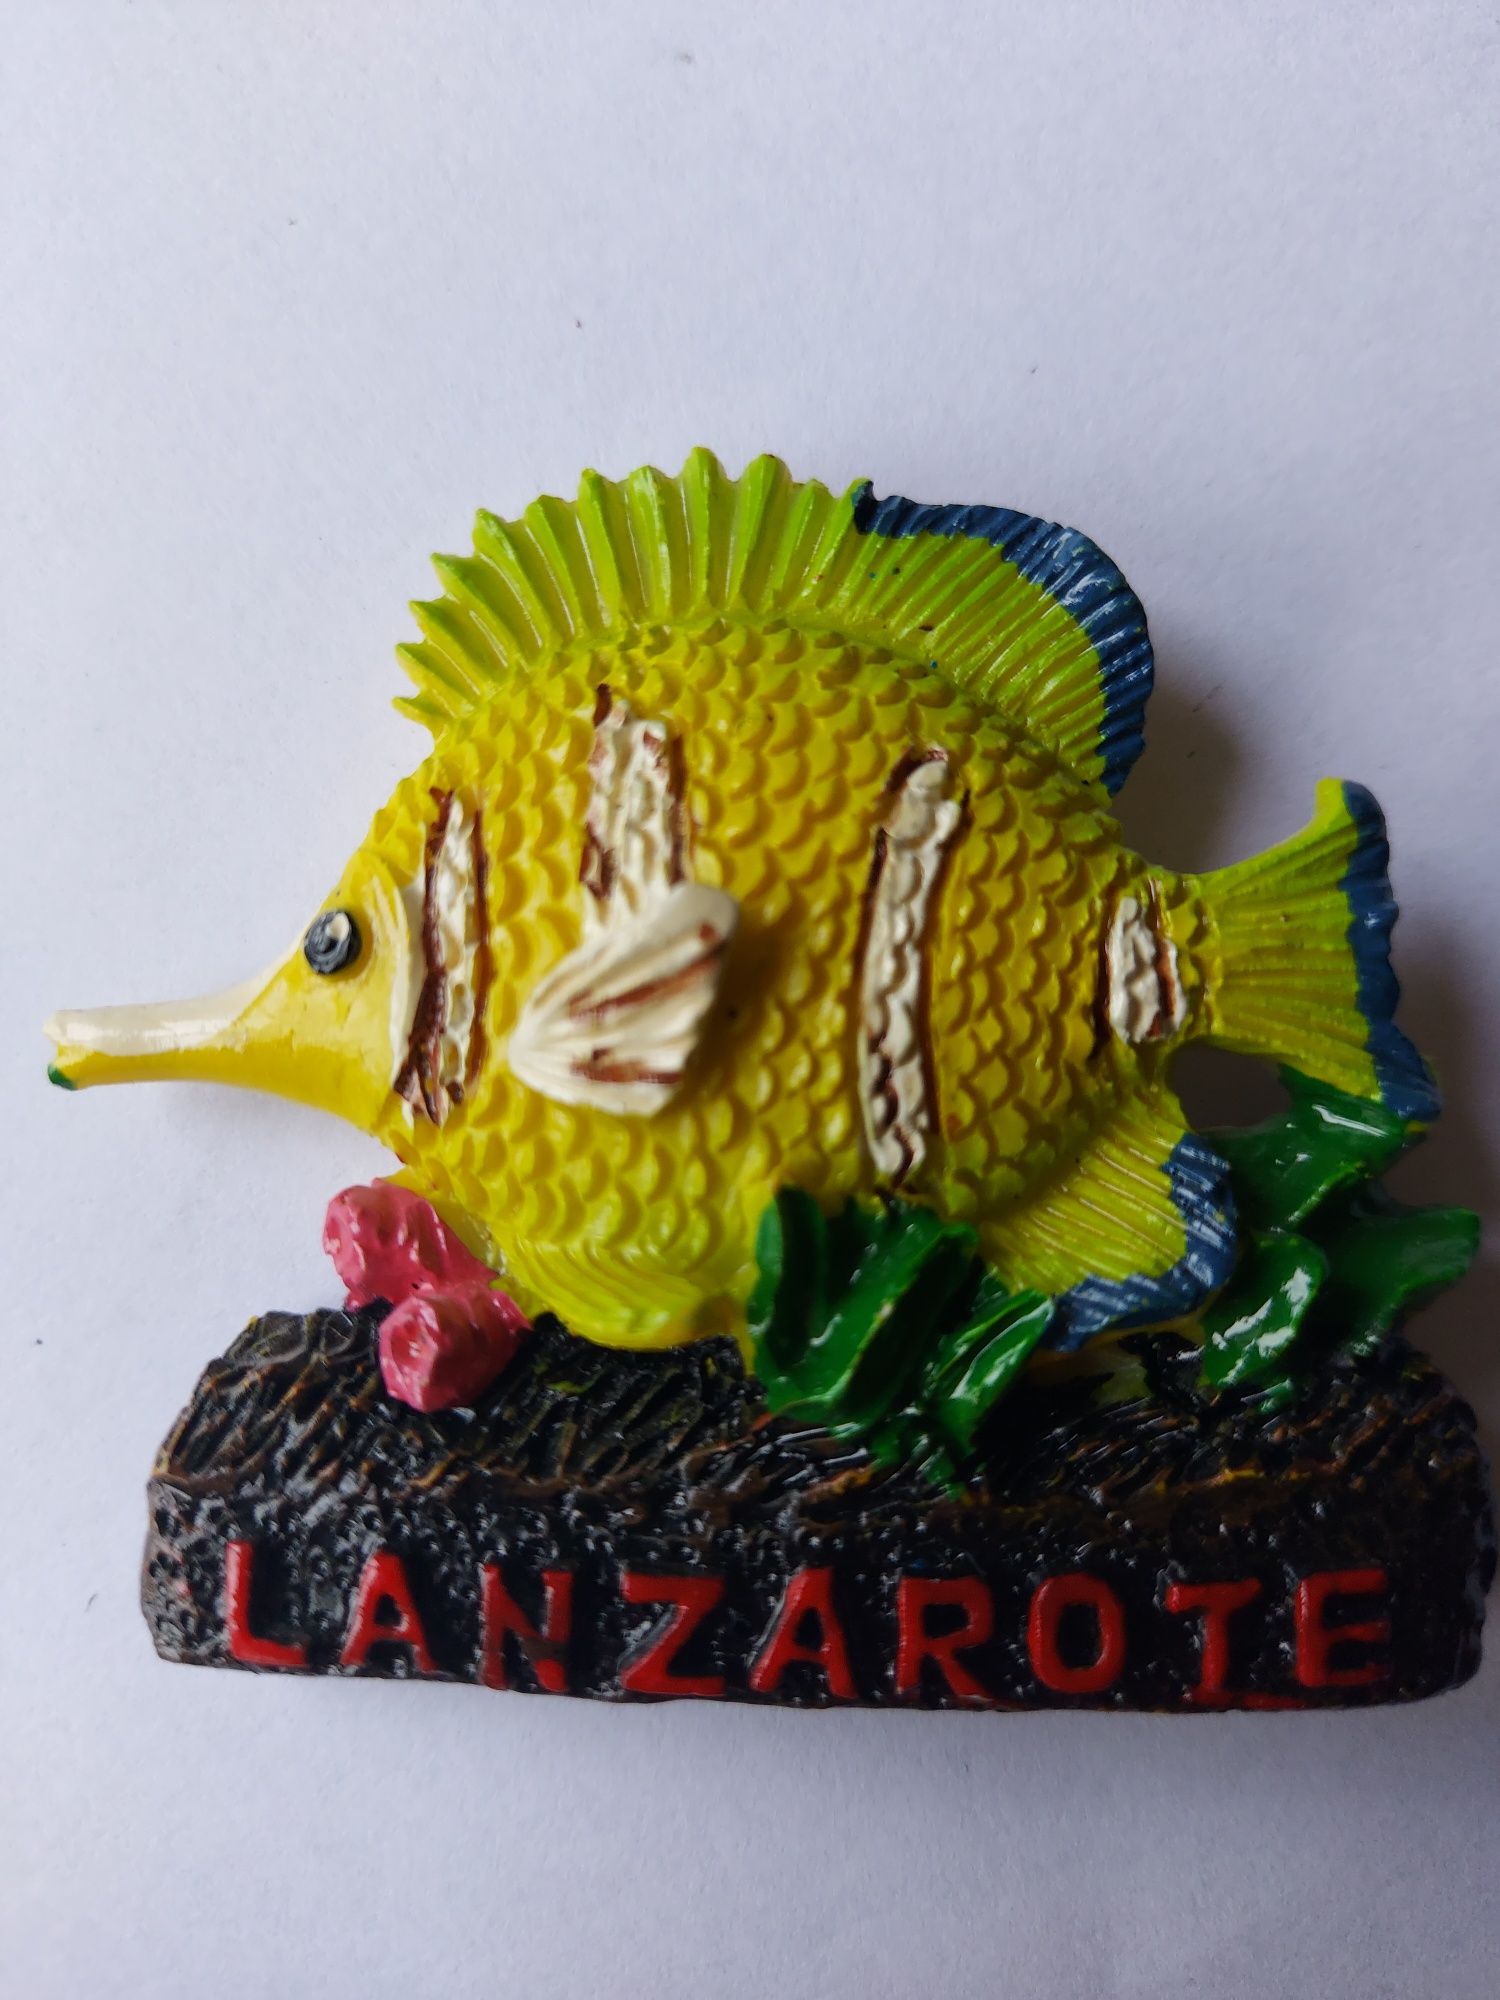 Lanzarote_1 (magnes na lodówkę)